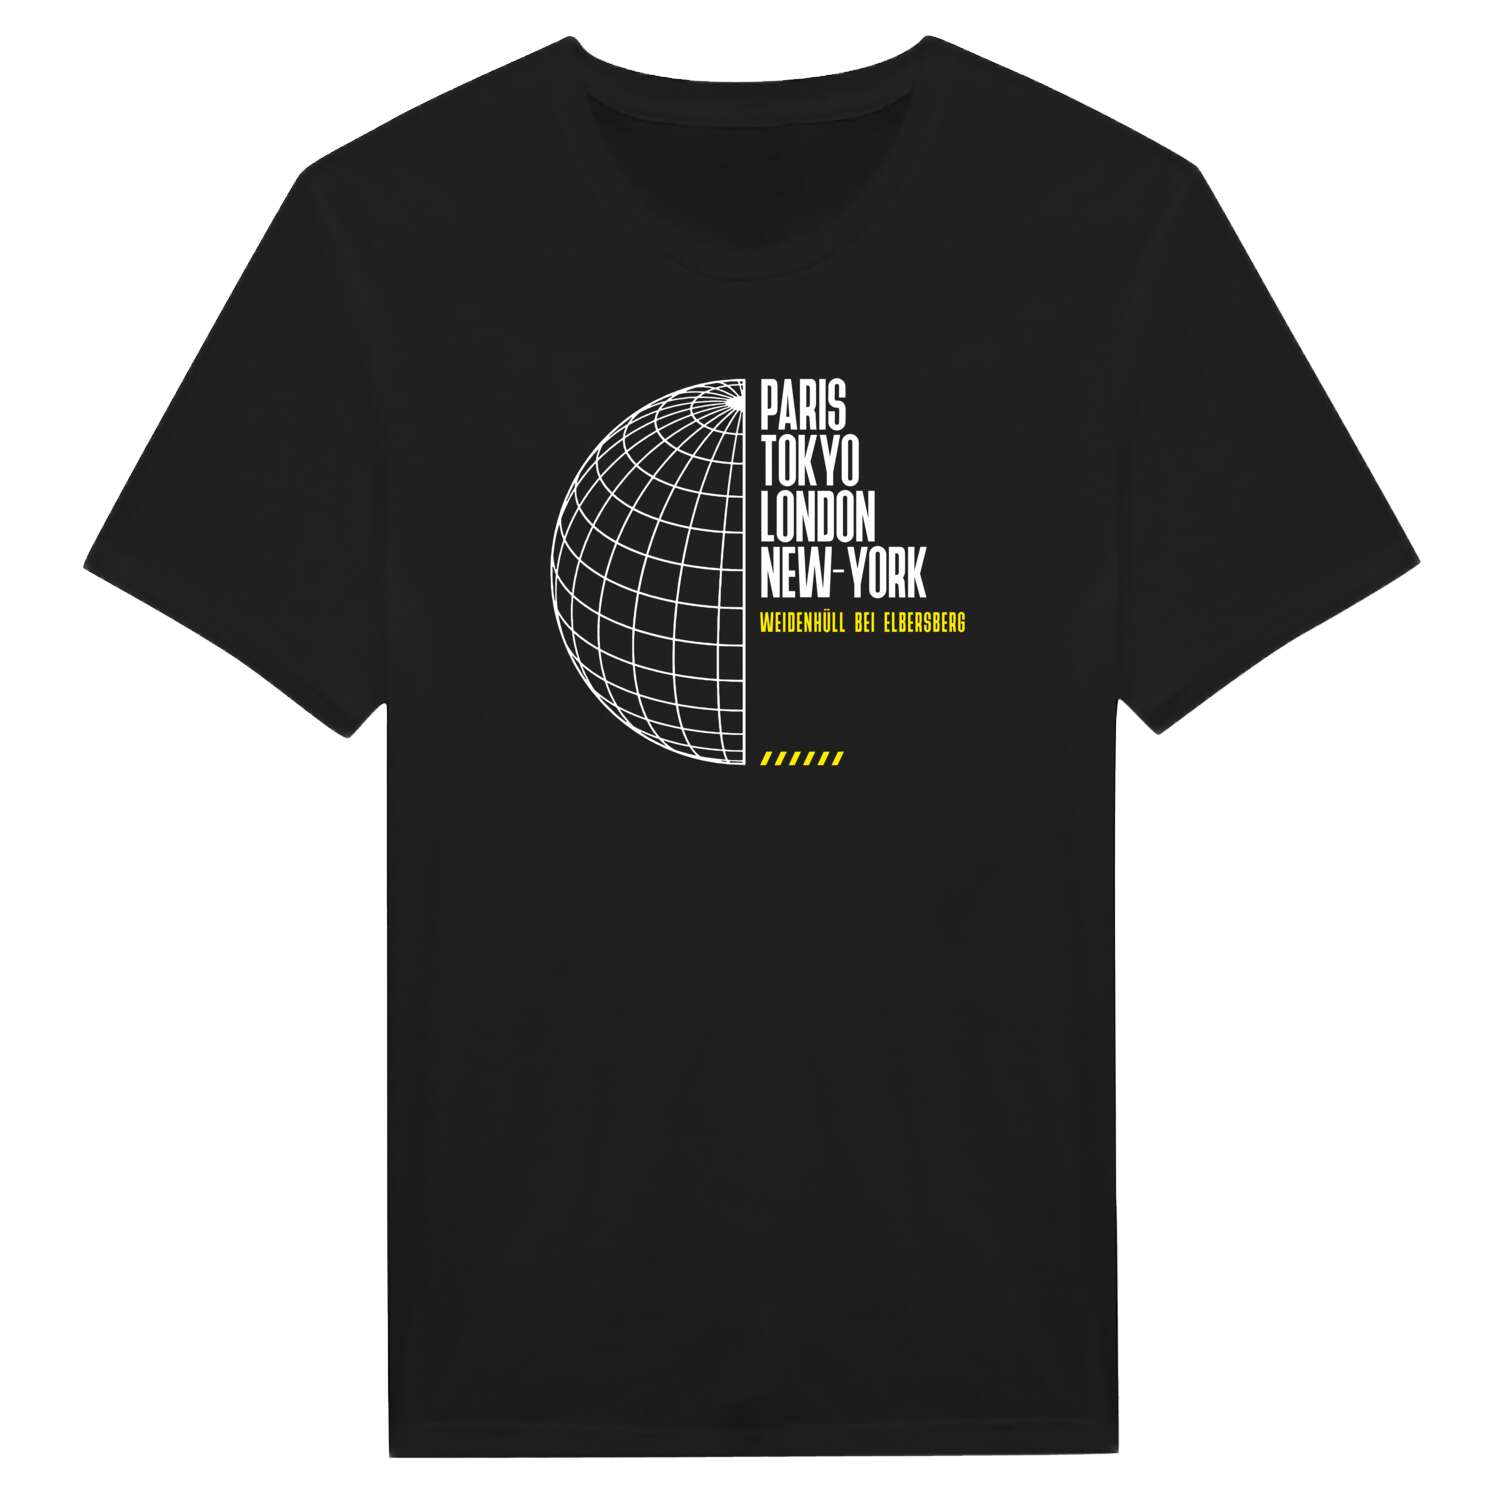 Weidenhüll bei Elbersberg T-Shirt »Paris Tokyo London«